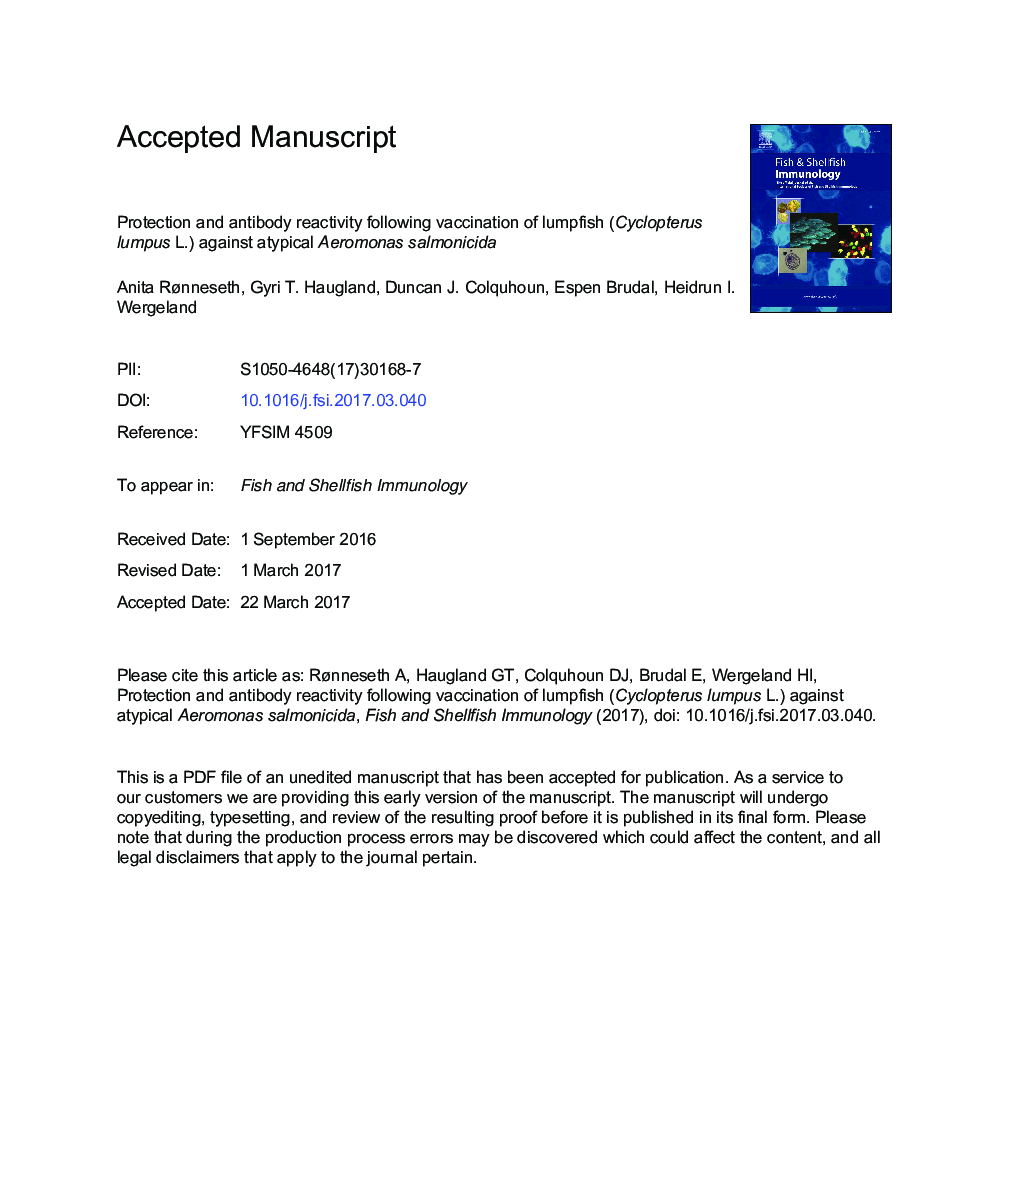 Protection and antibody reactivity following vaccination of lumpfish (Cyclopterus lumpus L.) against atypical Aeromonas salmonicida